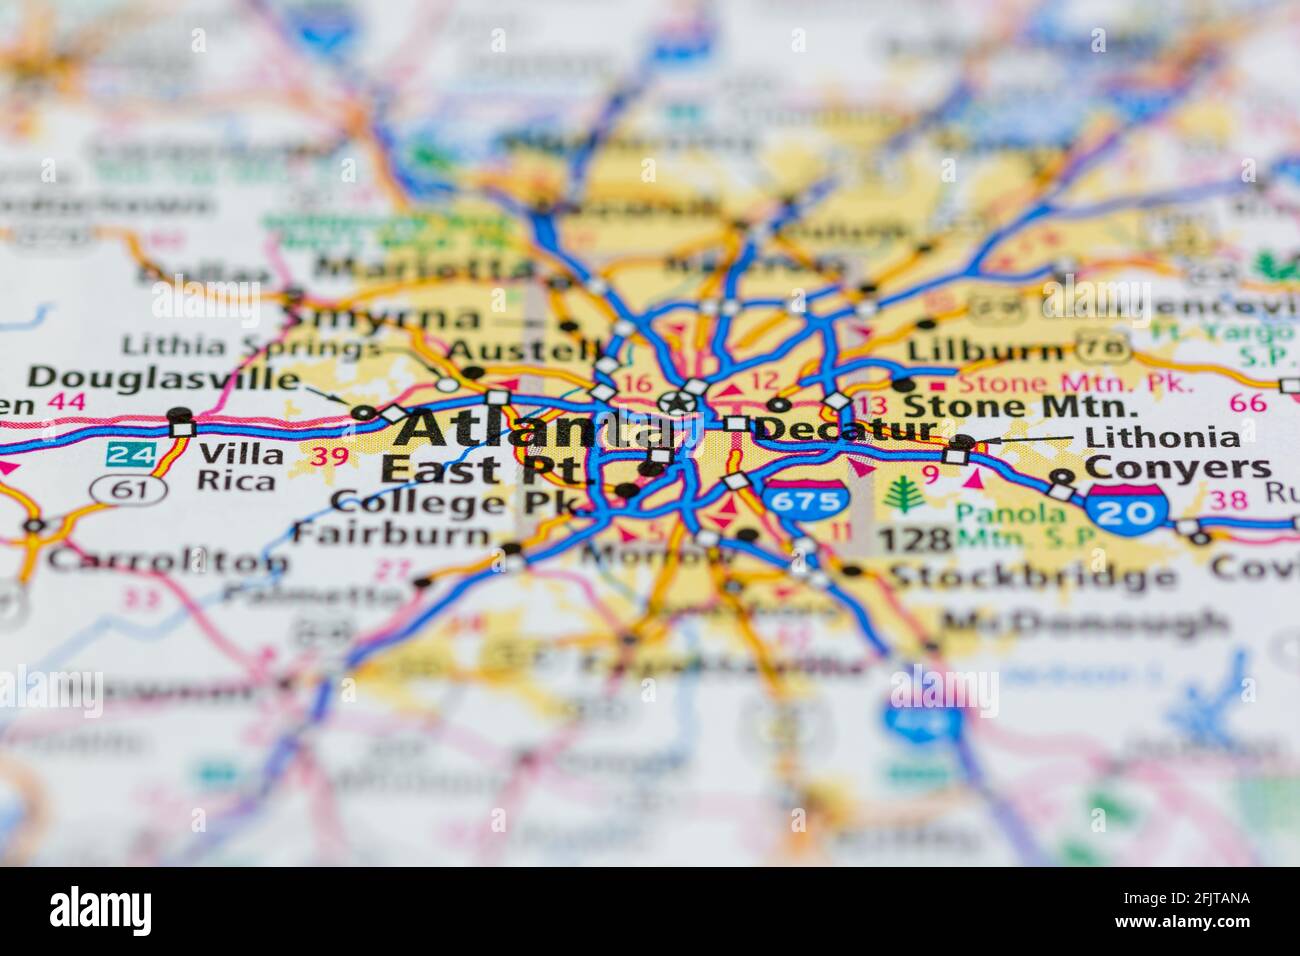 Map Of Atlanta And Surrounding Areas 